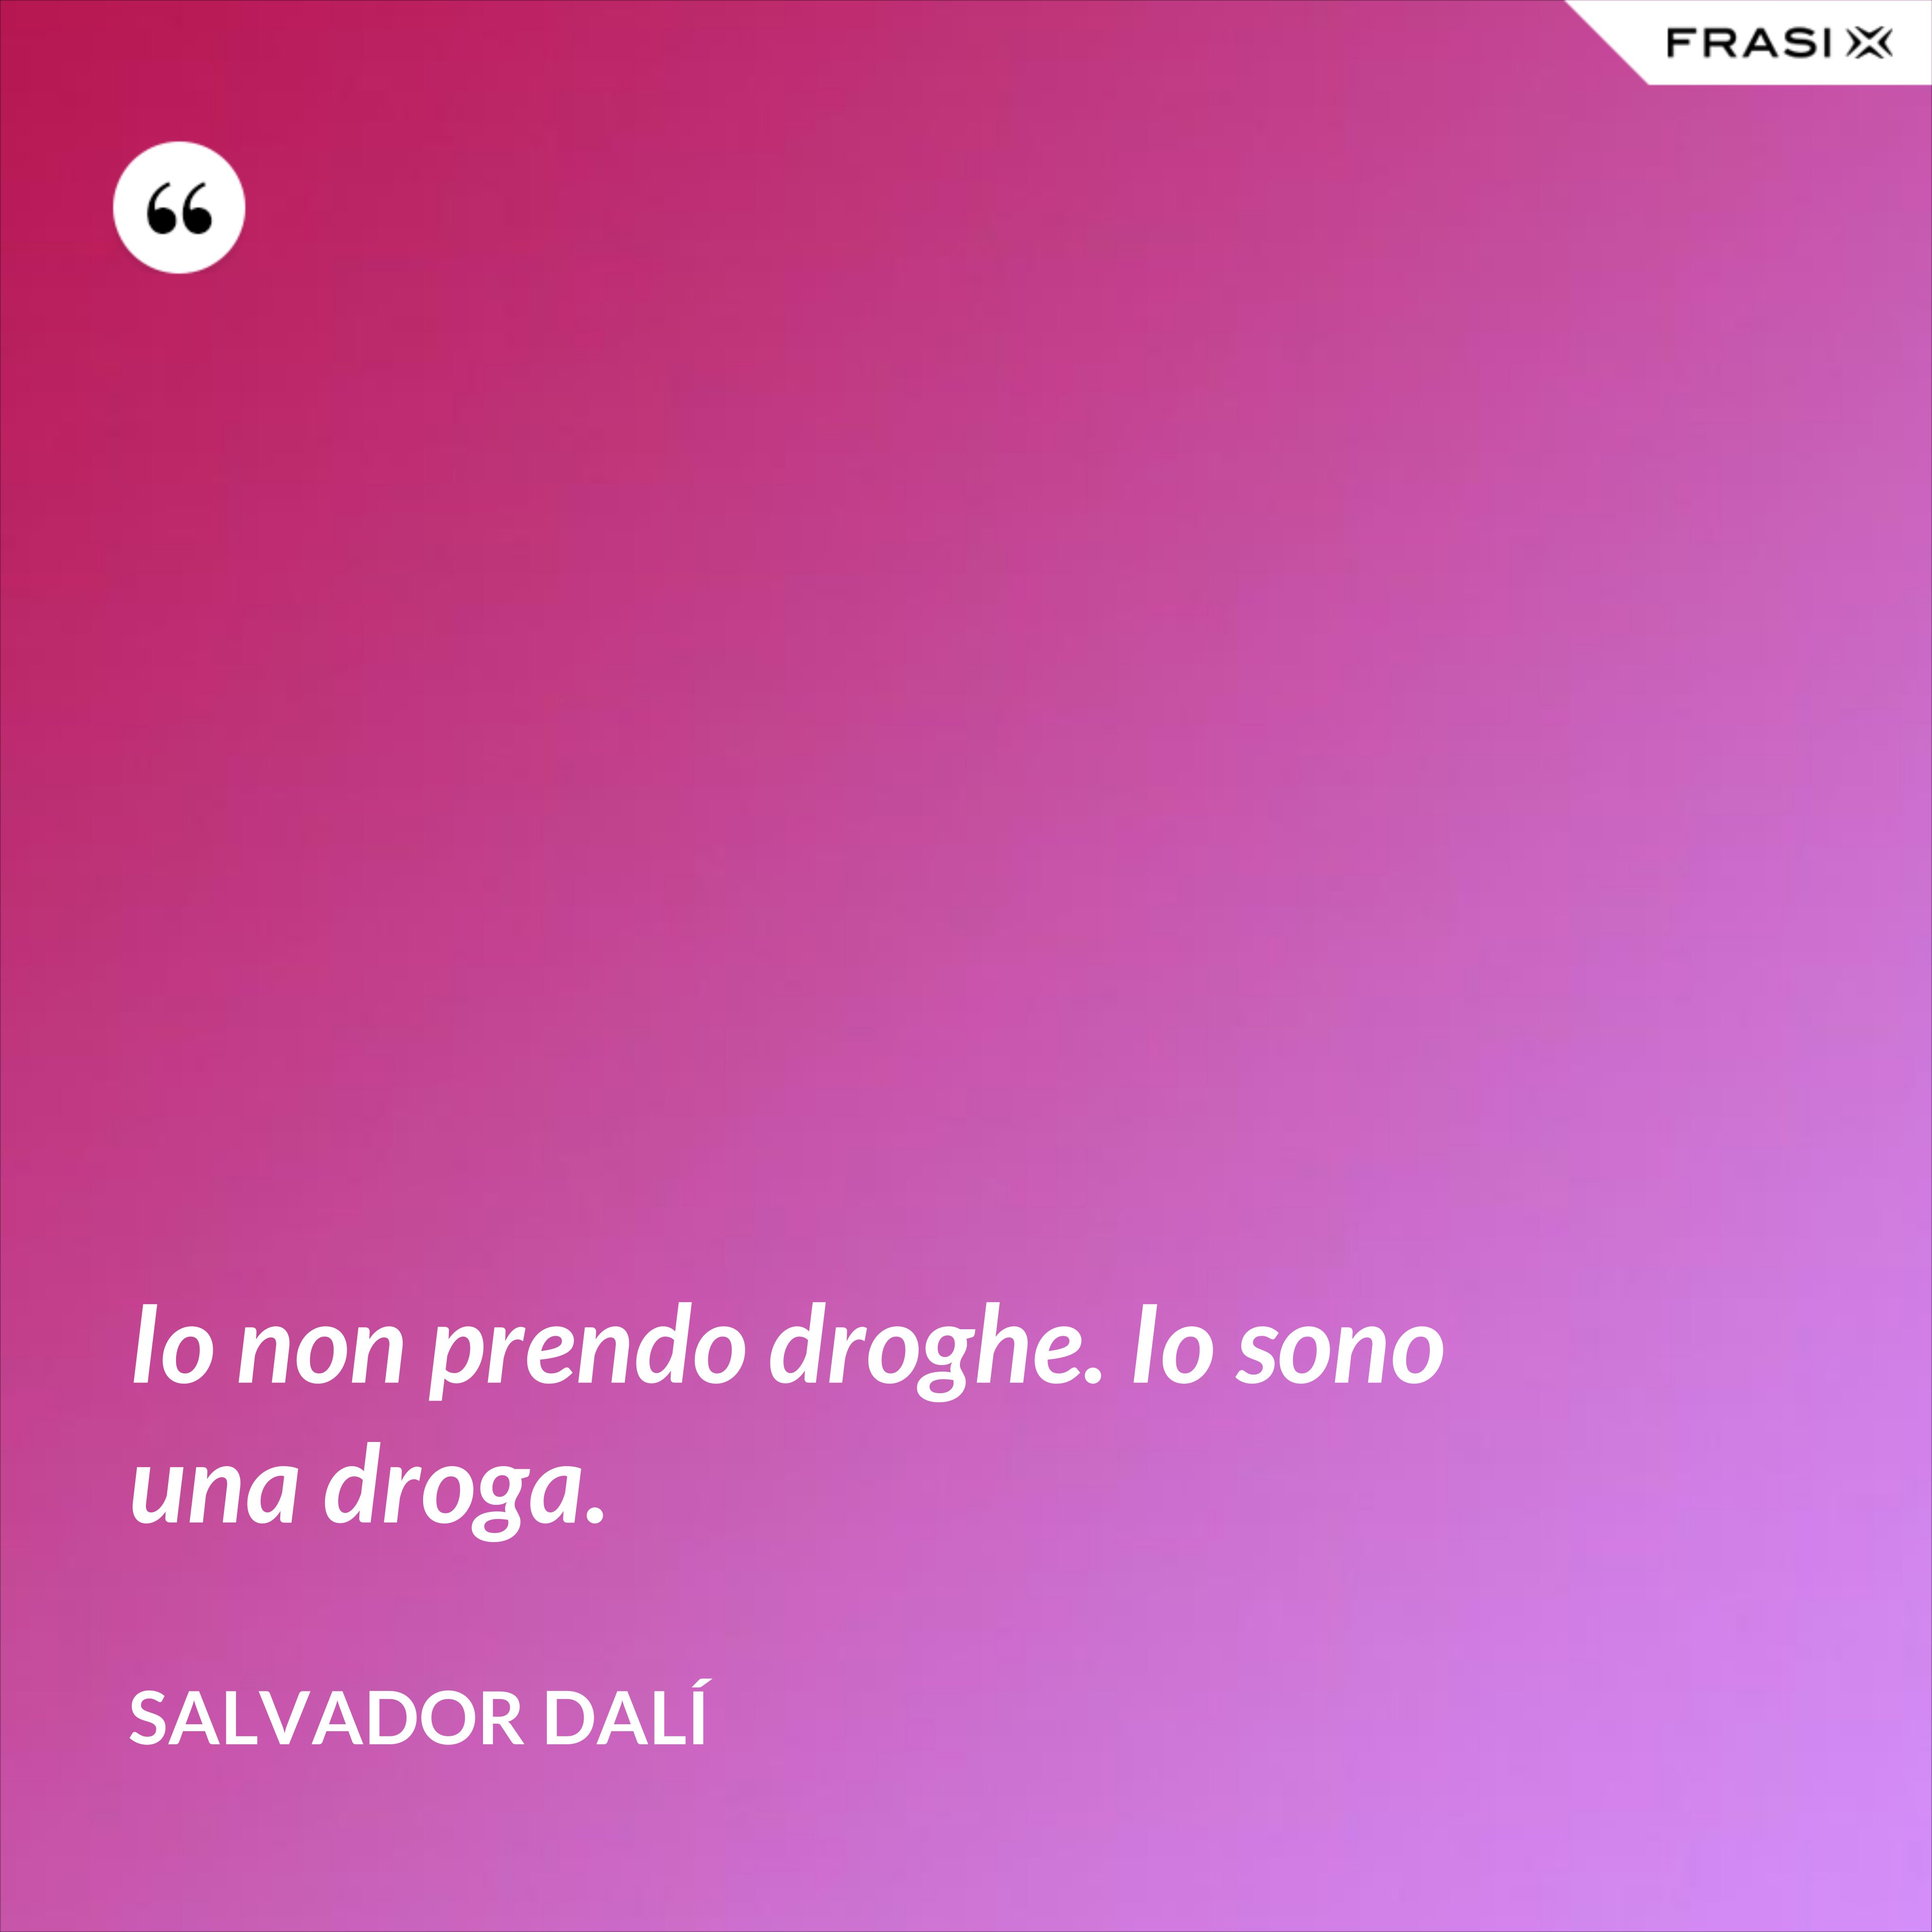 Io non prendo droghe. Io sono una droga. - Salvador Dalí